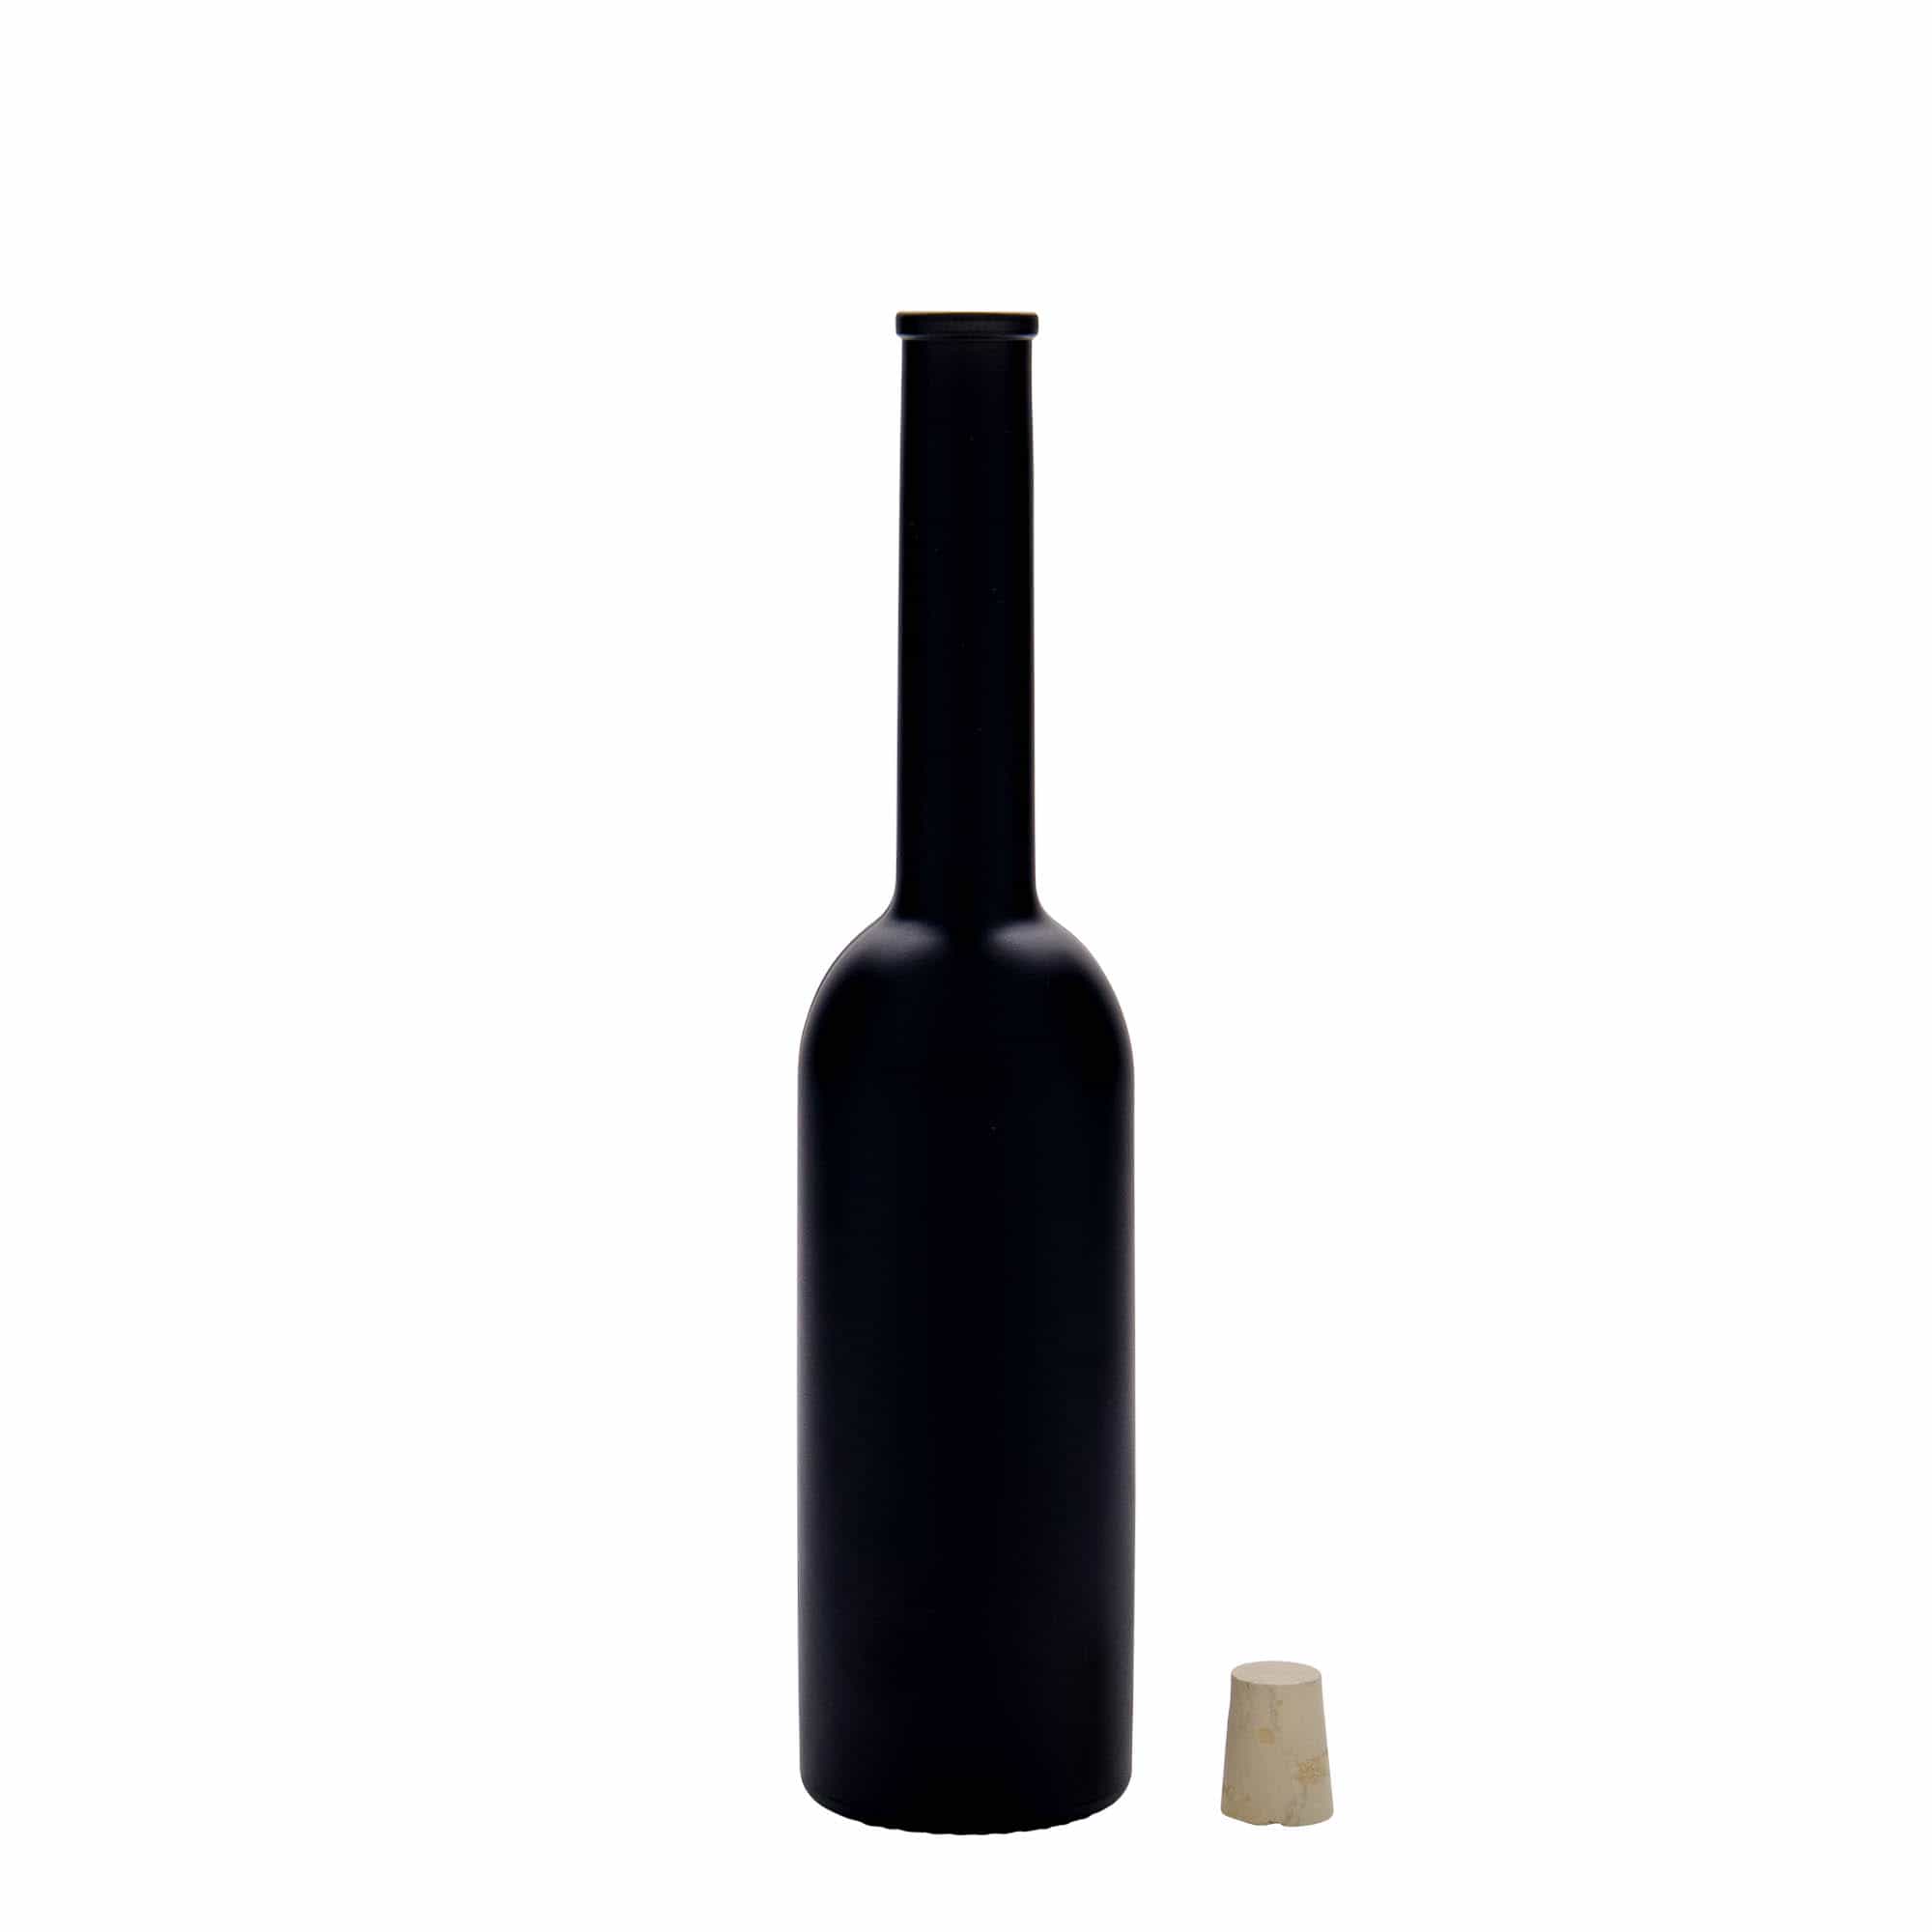 200 ml glass bottle 'Opera', black, closure: cork